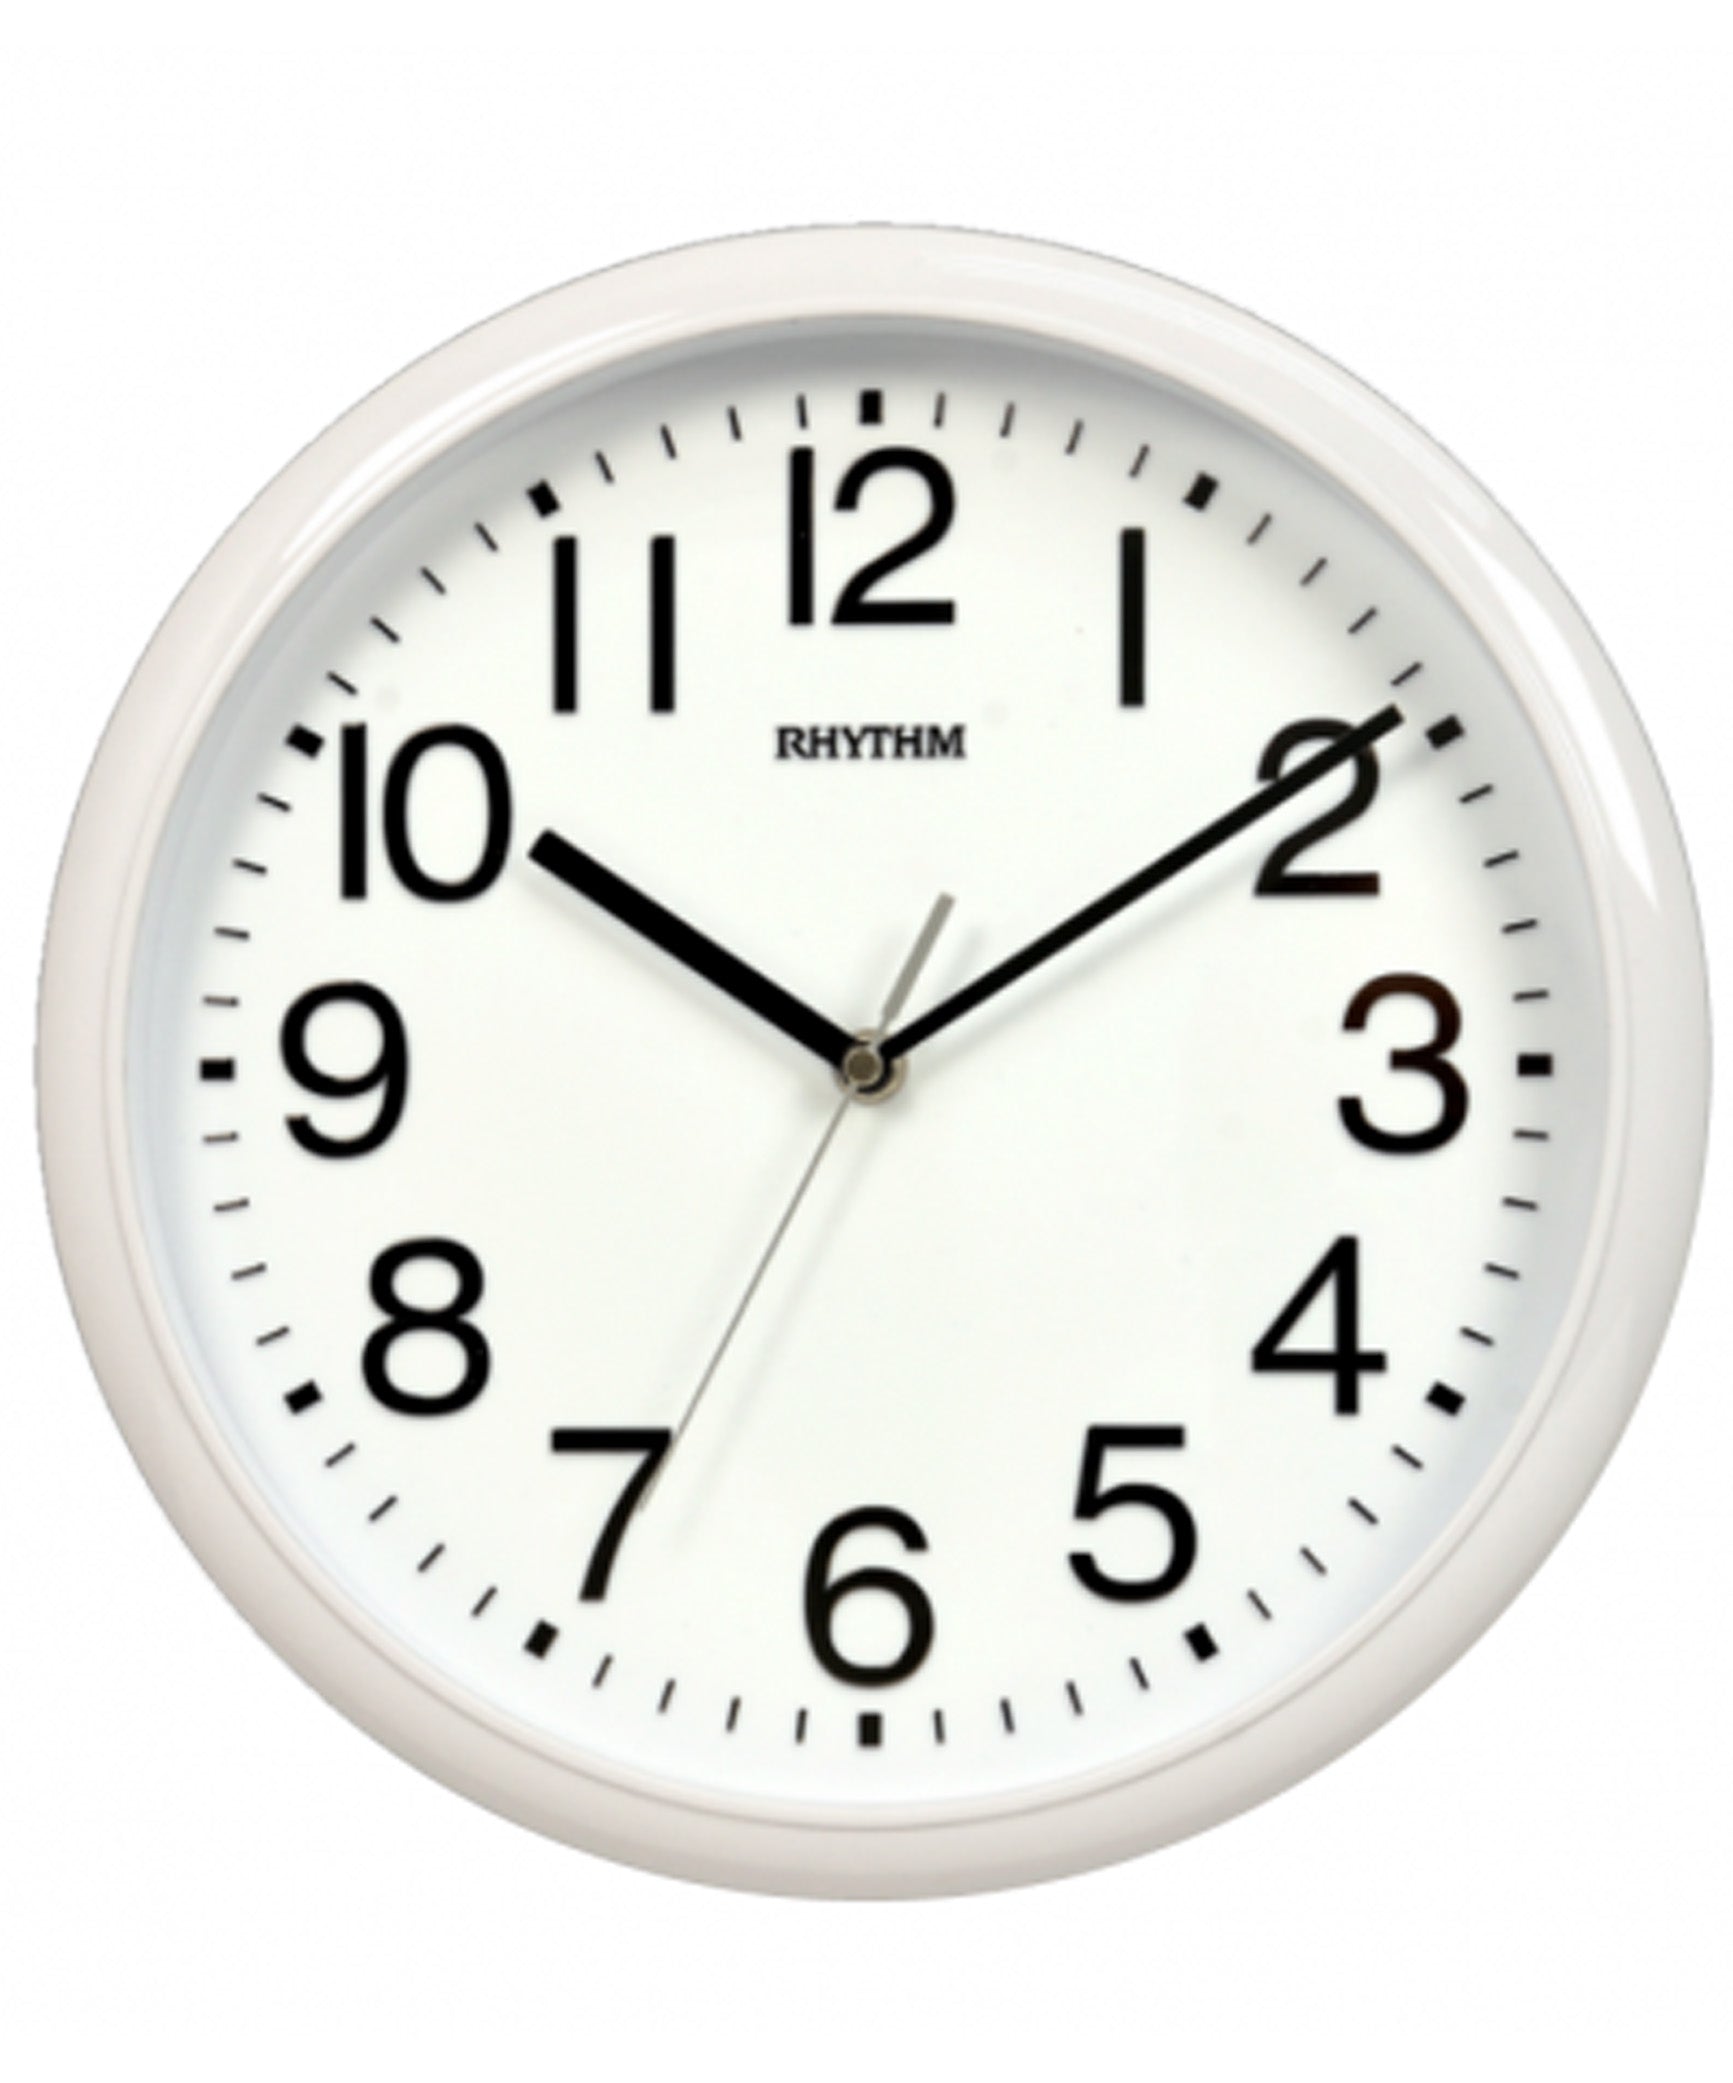 Rhythm Wall Clock Analog Clock White Dial White Case